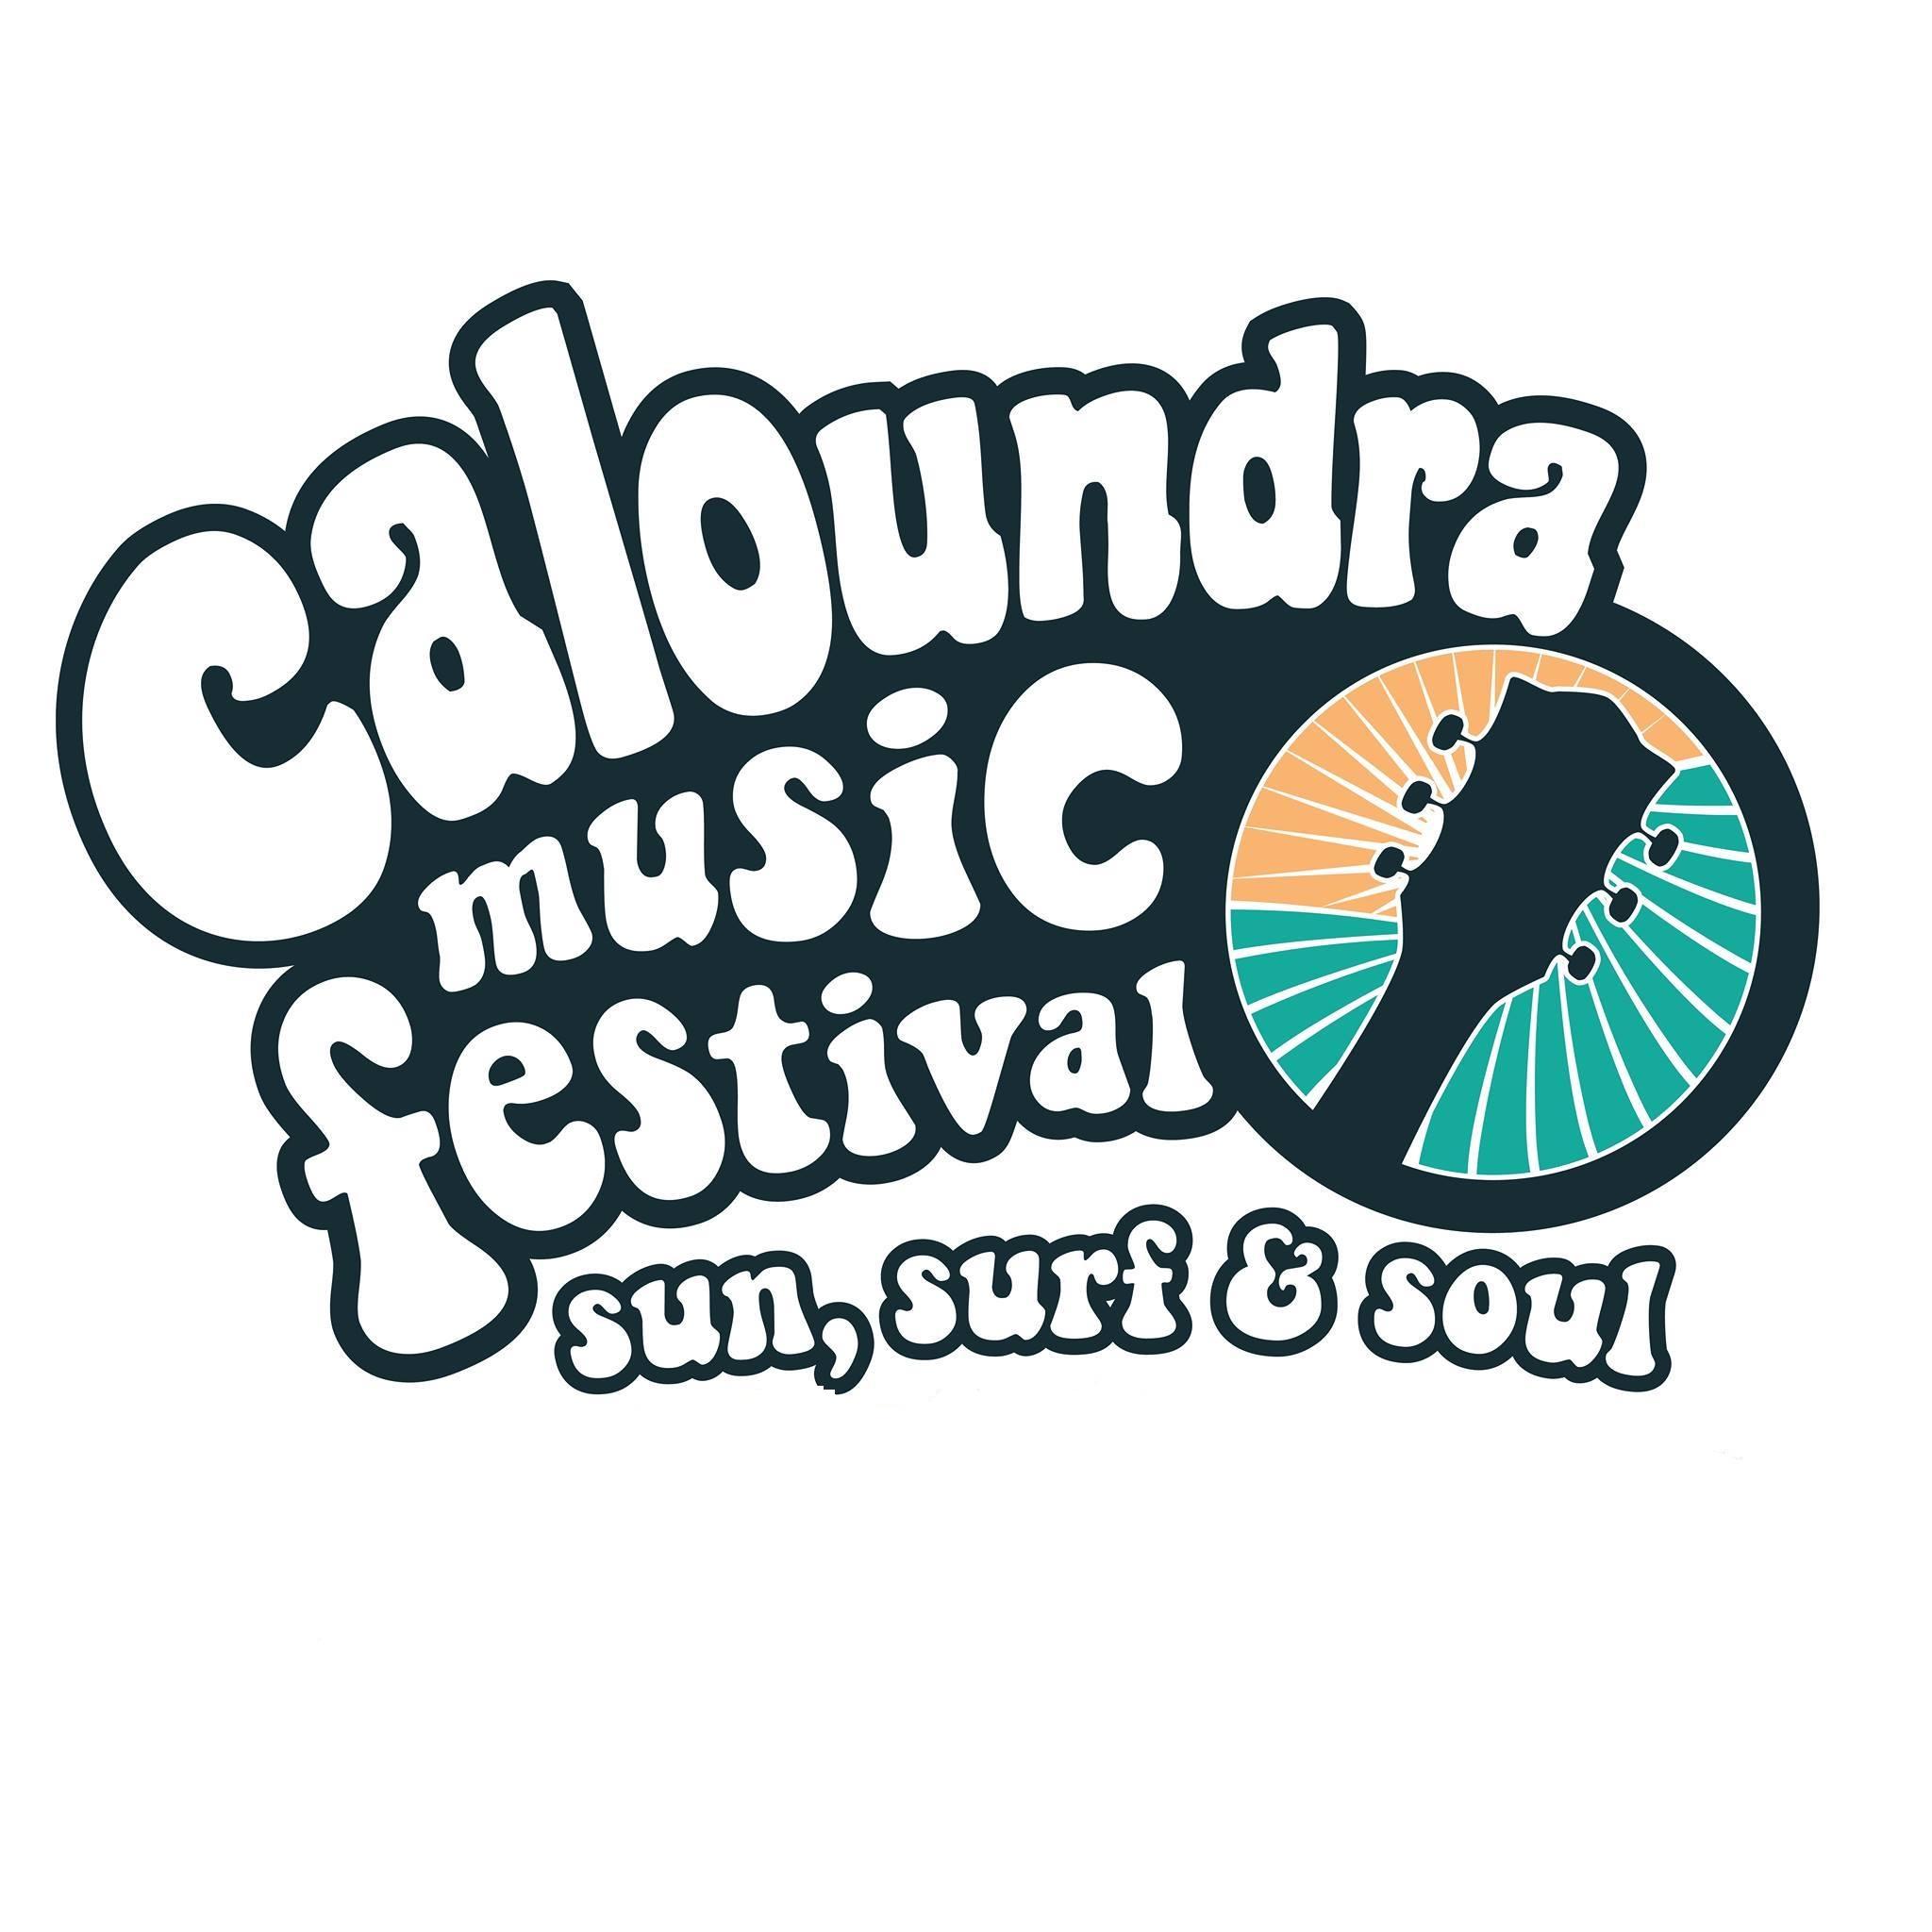 Caloundra Music Festival Festival Lineup, Dates and Location